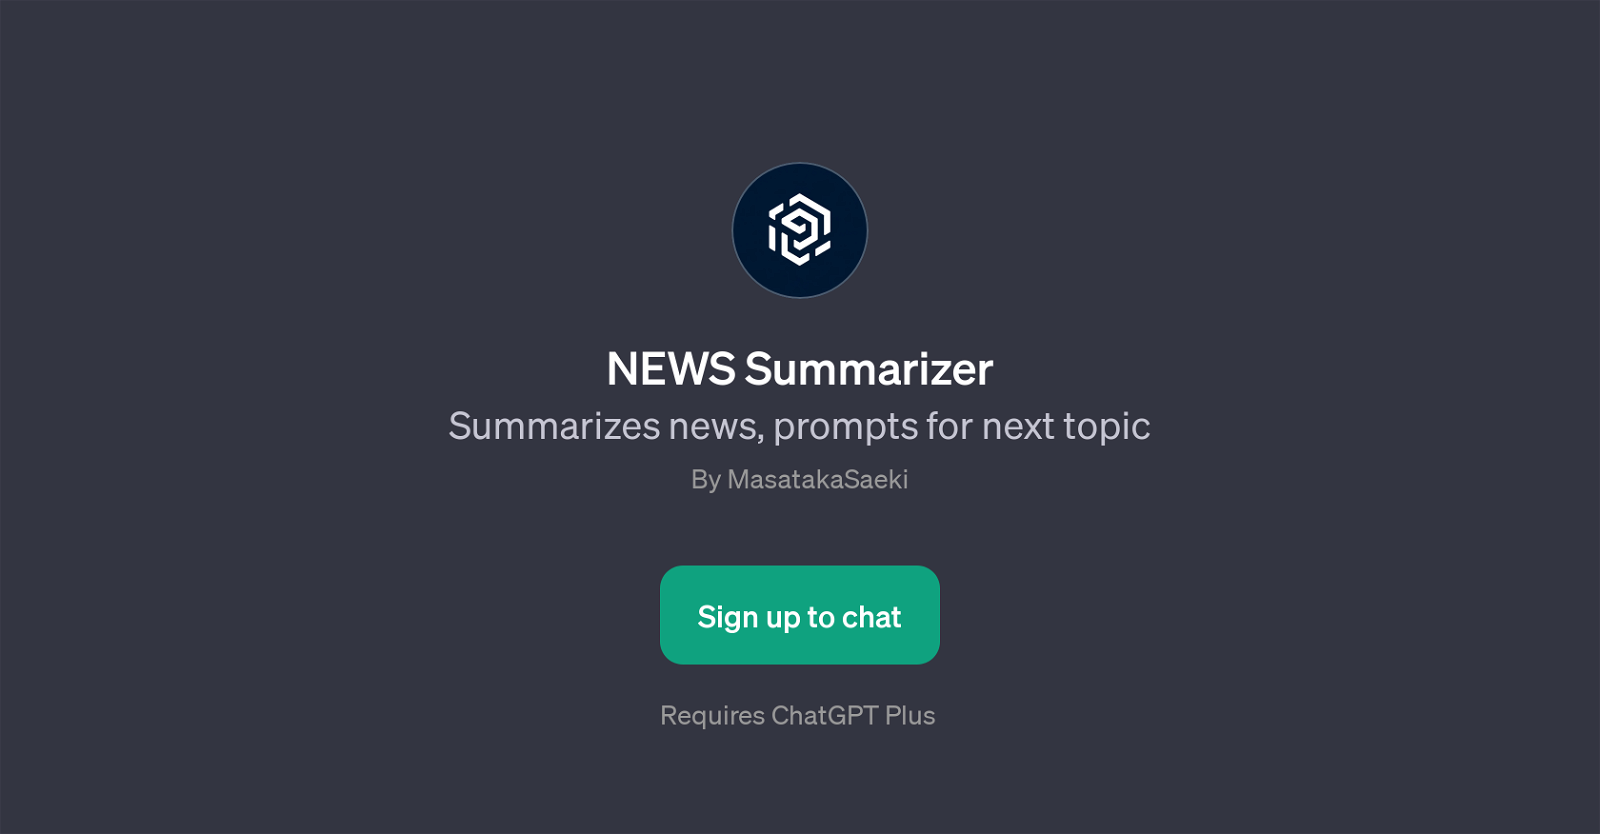 NEWS Summarizer website